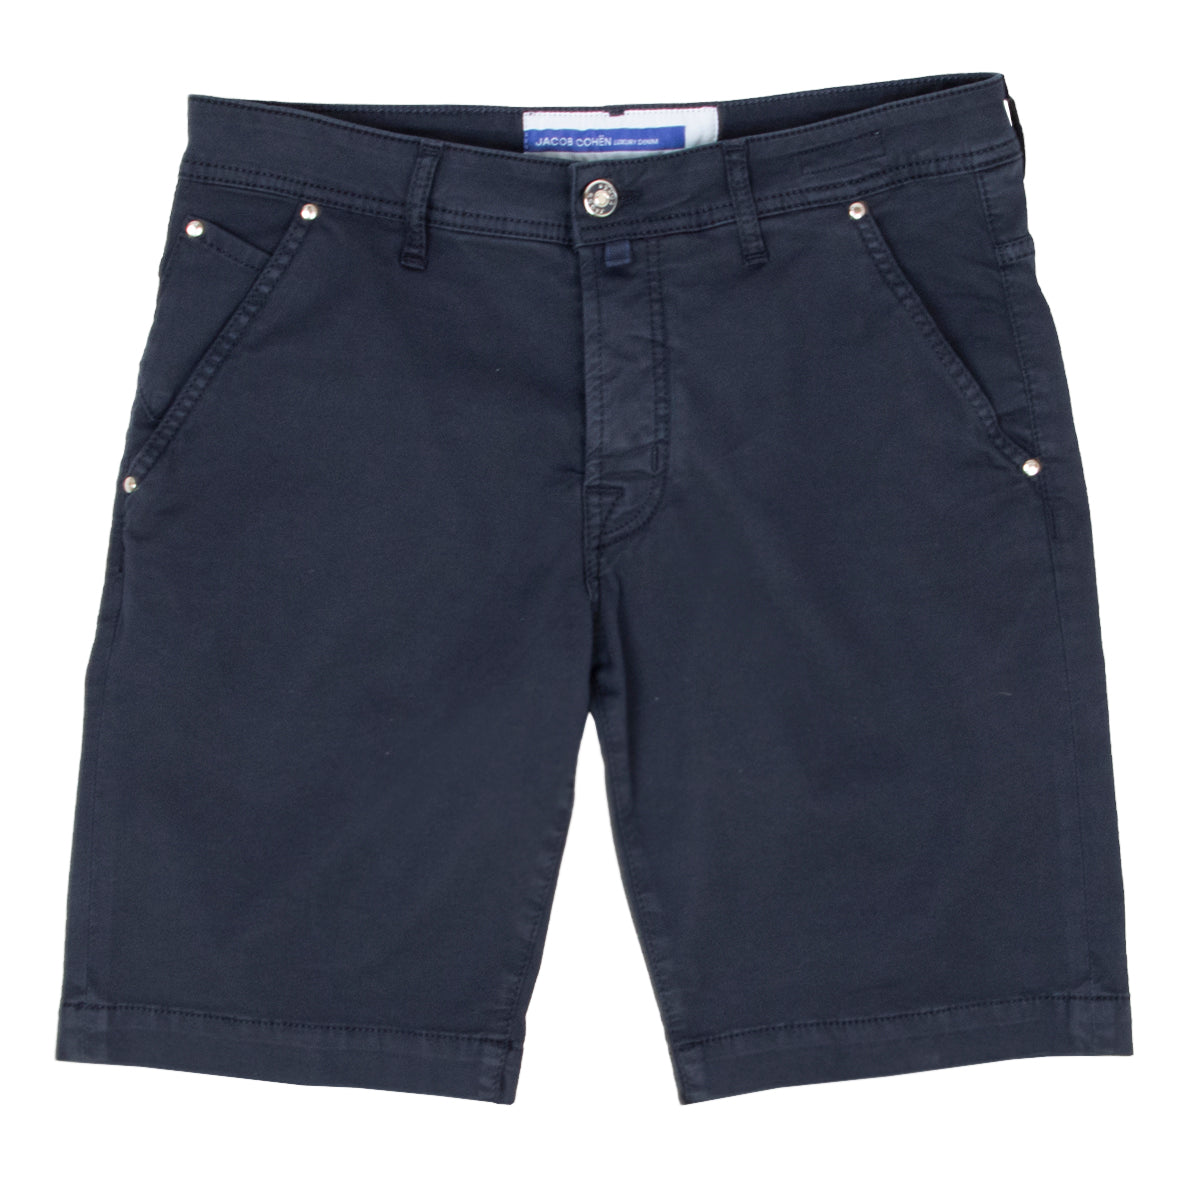 Navy Blue Lou Five Pocket Shorts  Jacob Cohën   